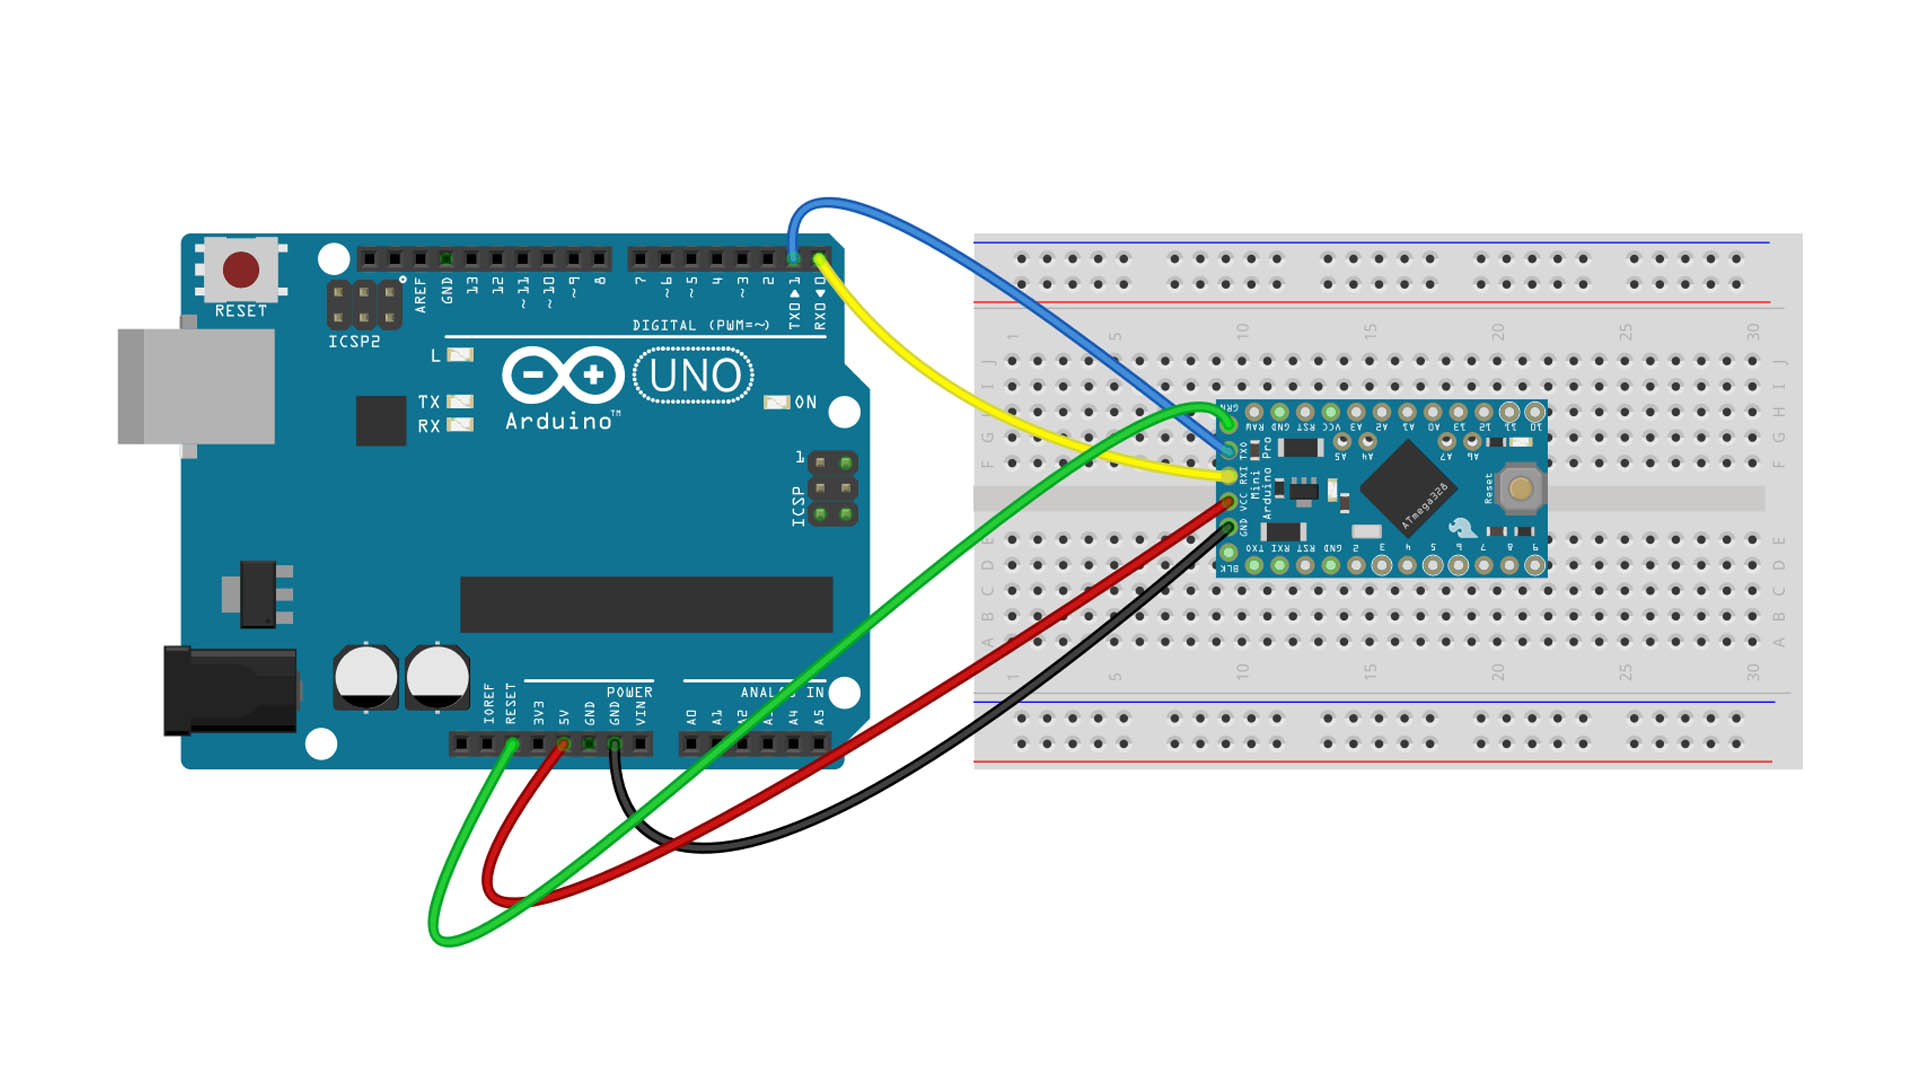 Arduino Pro Mini Programming with Arduino UNO – RC Models, DIY